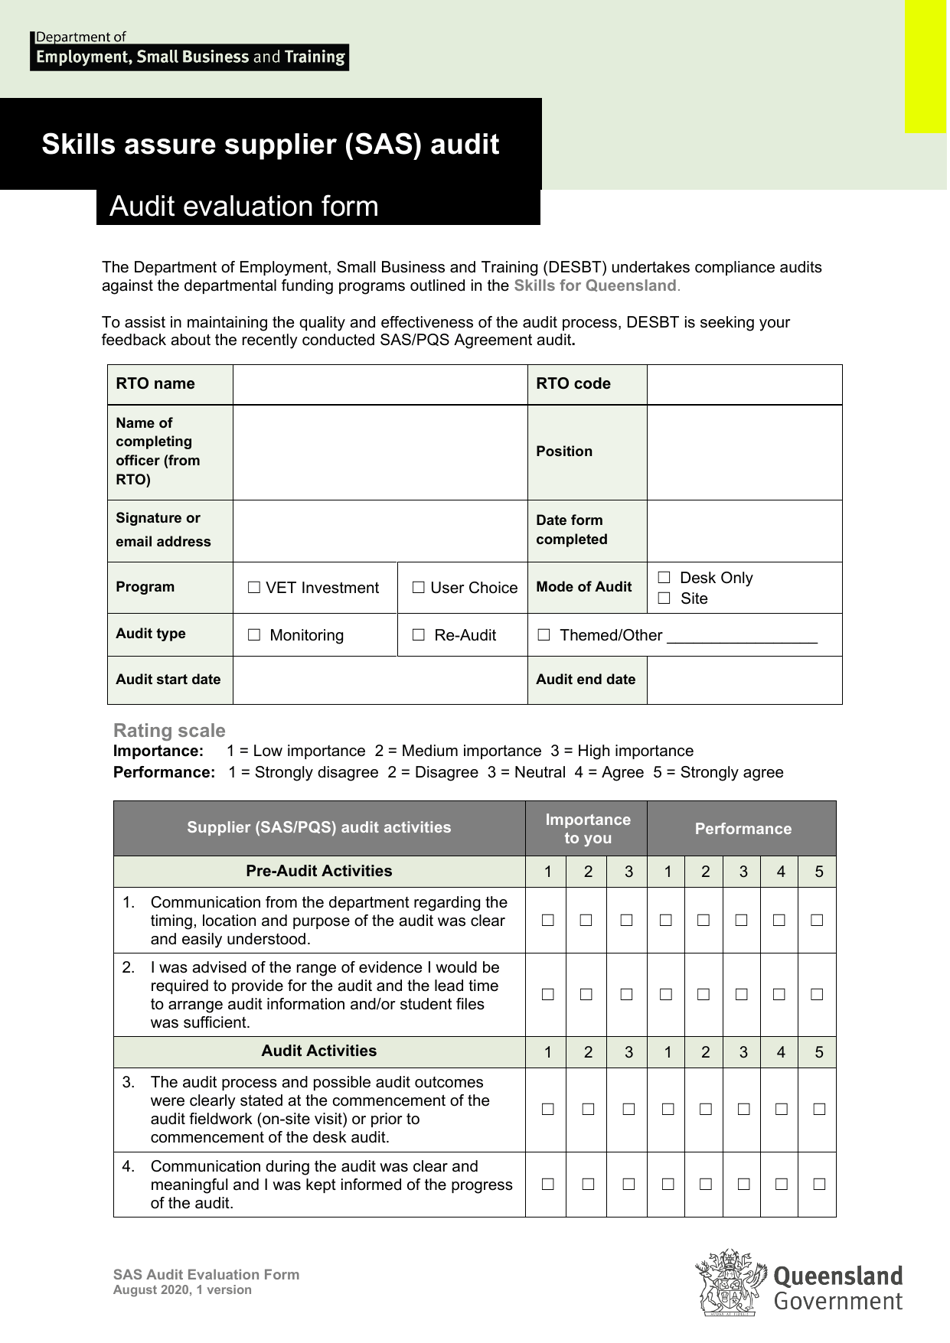 Skills Assure Supplier (Sas) Audit Evaluation Form - Queensland, Australia, Page 1